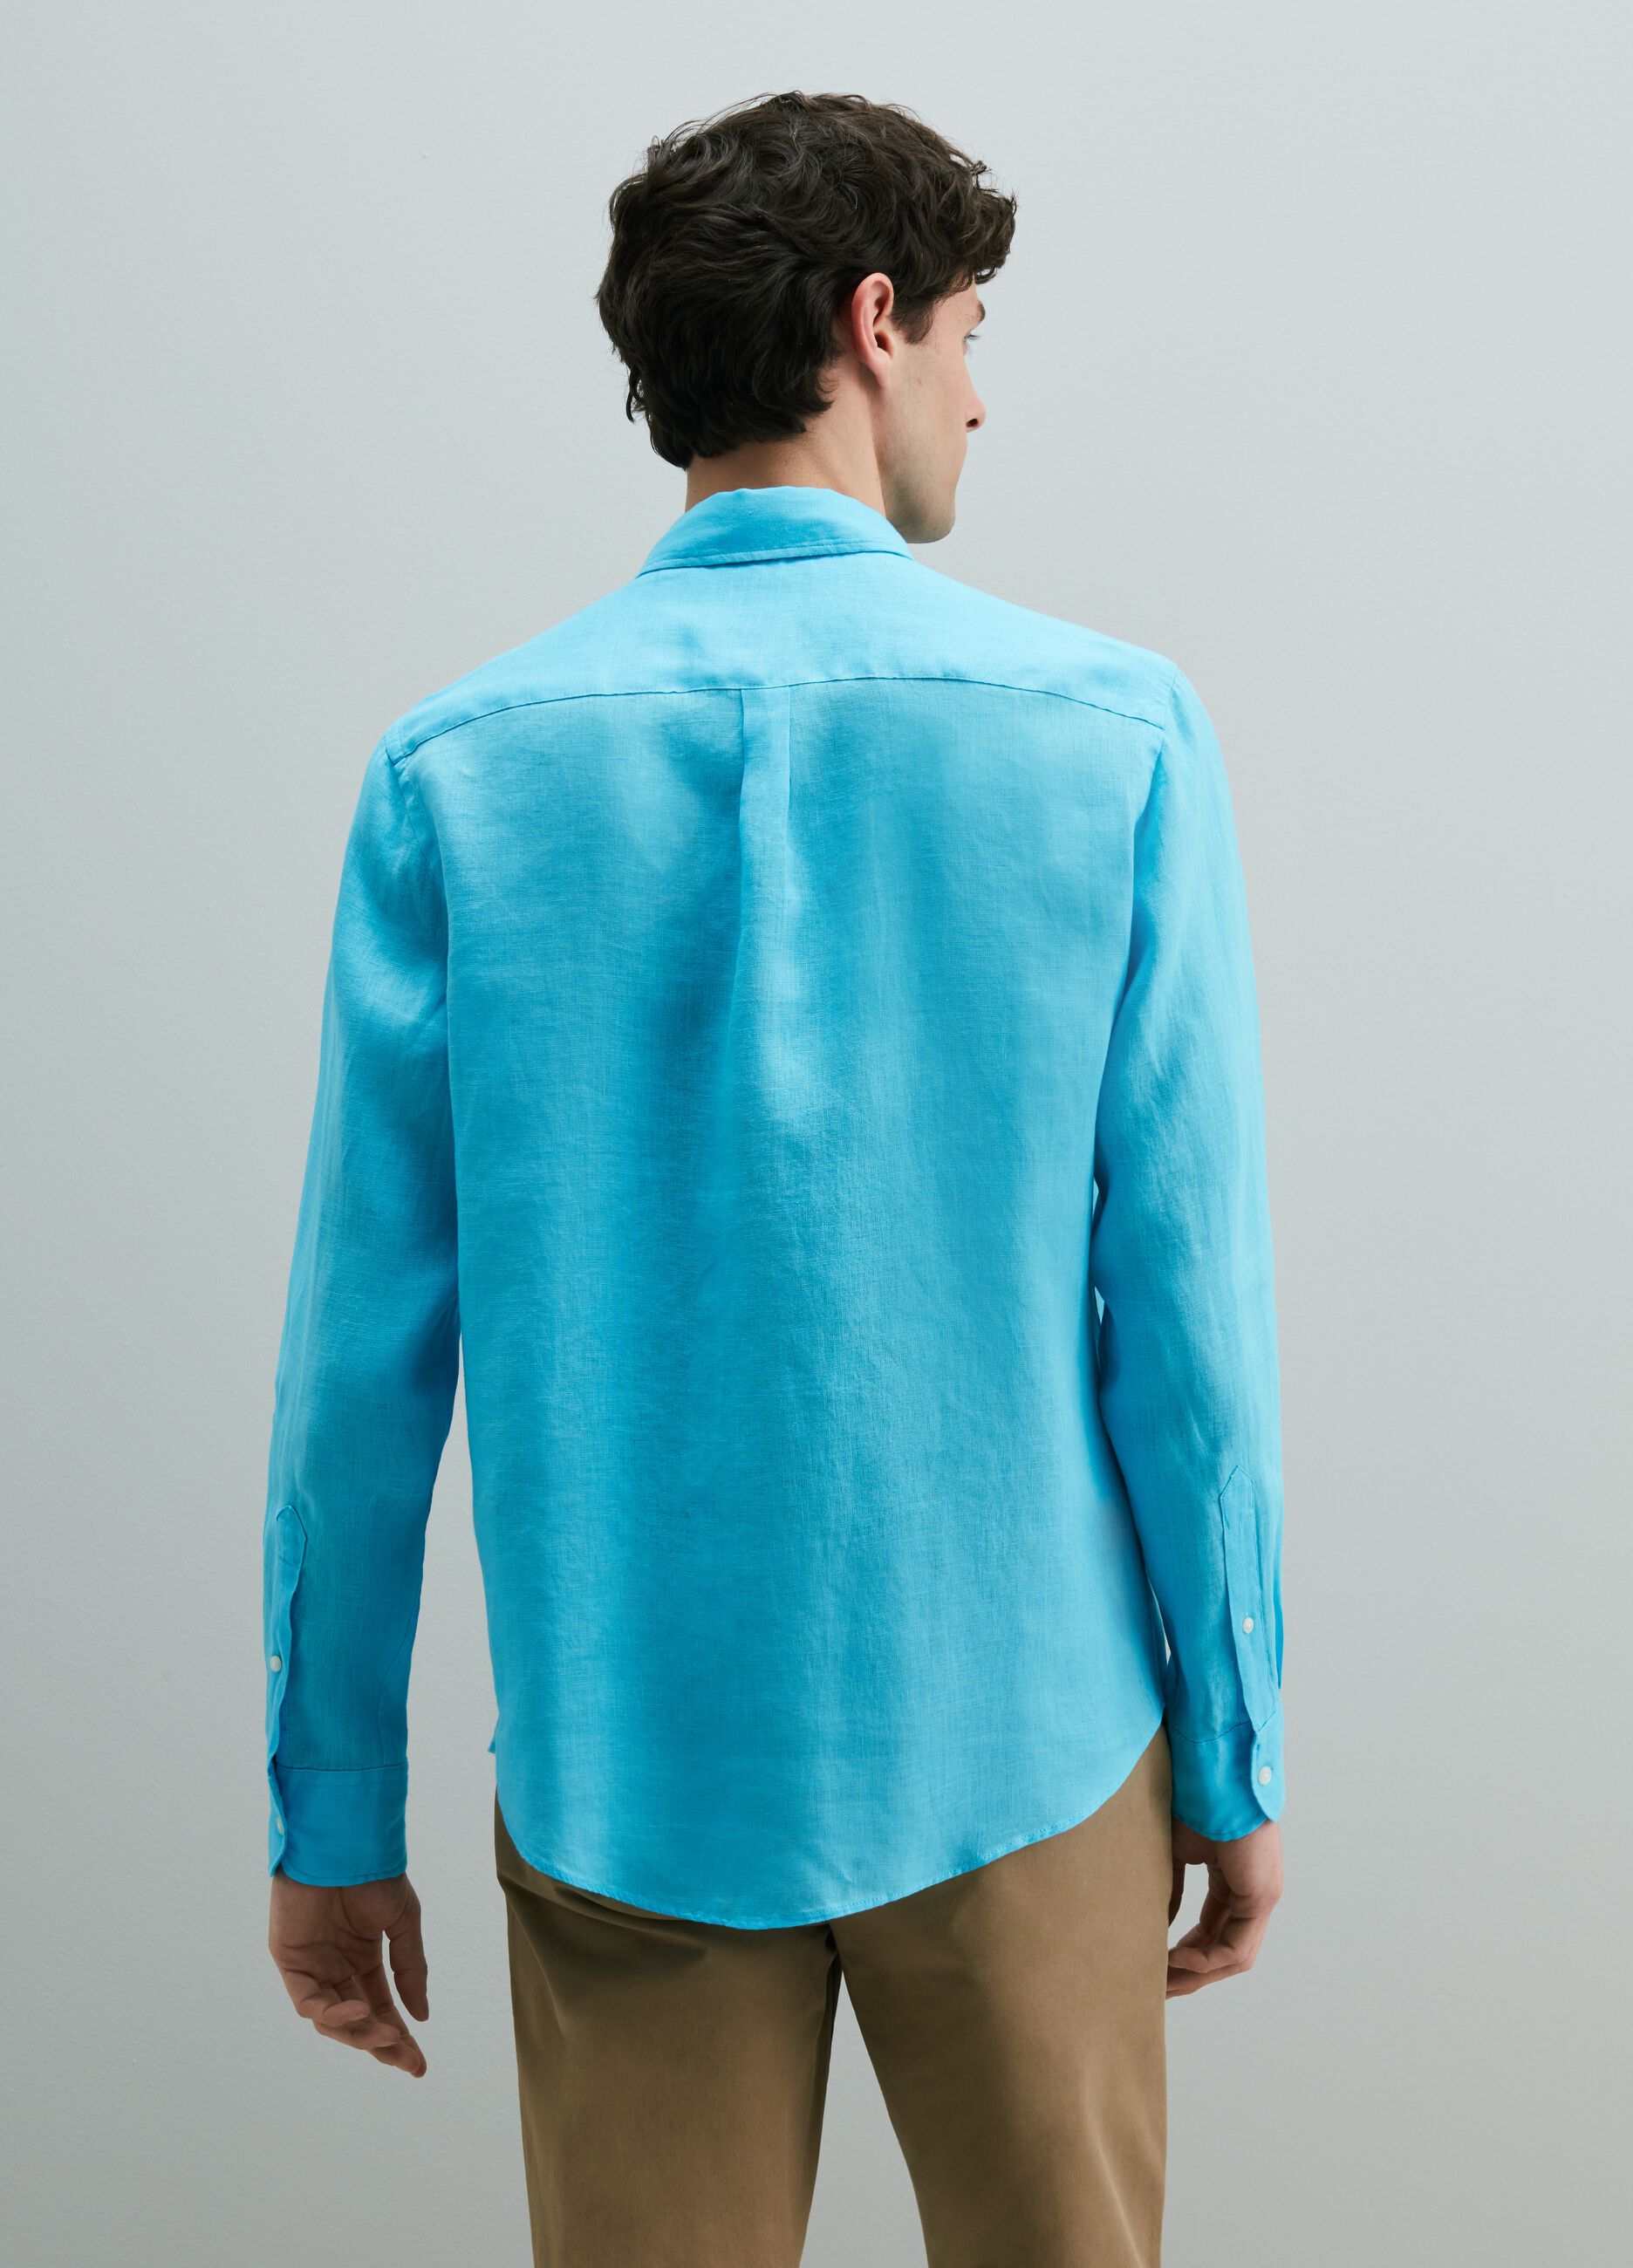 Linen shirt with button-down collar